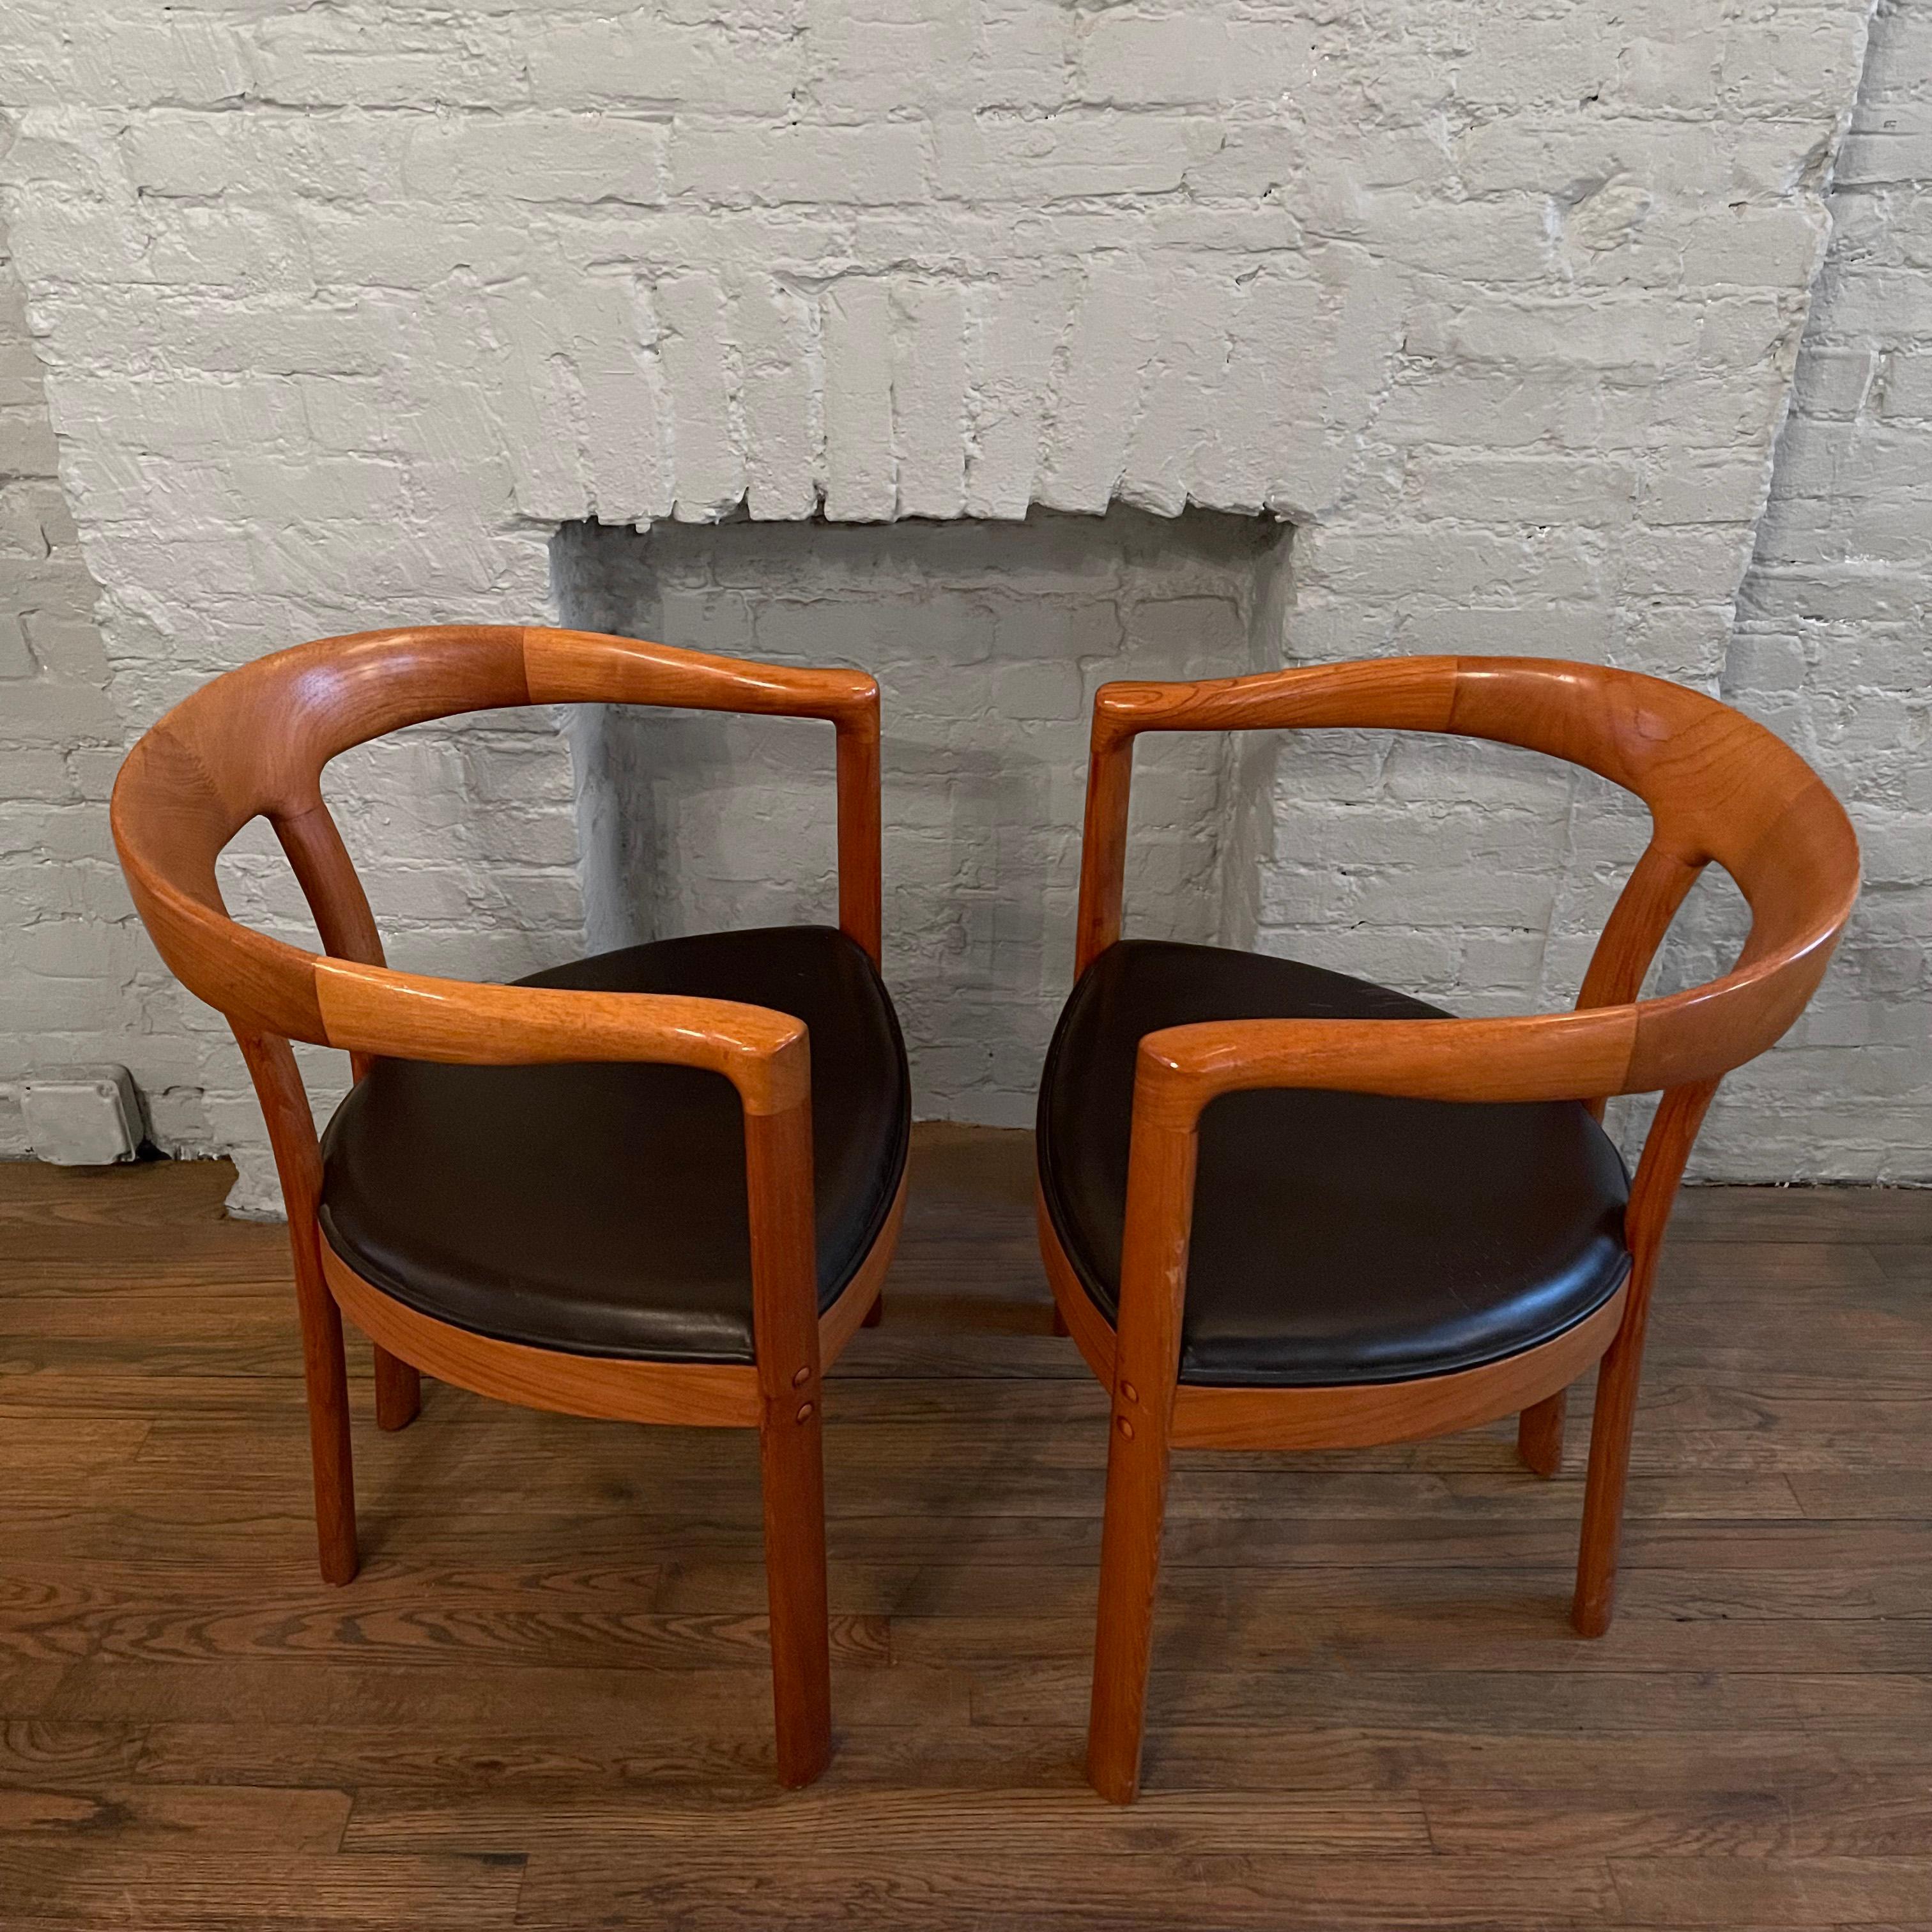 20th Century Pair of Danish Modern Teak Barrel Chairs